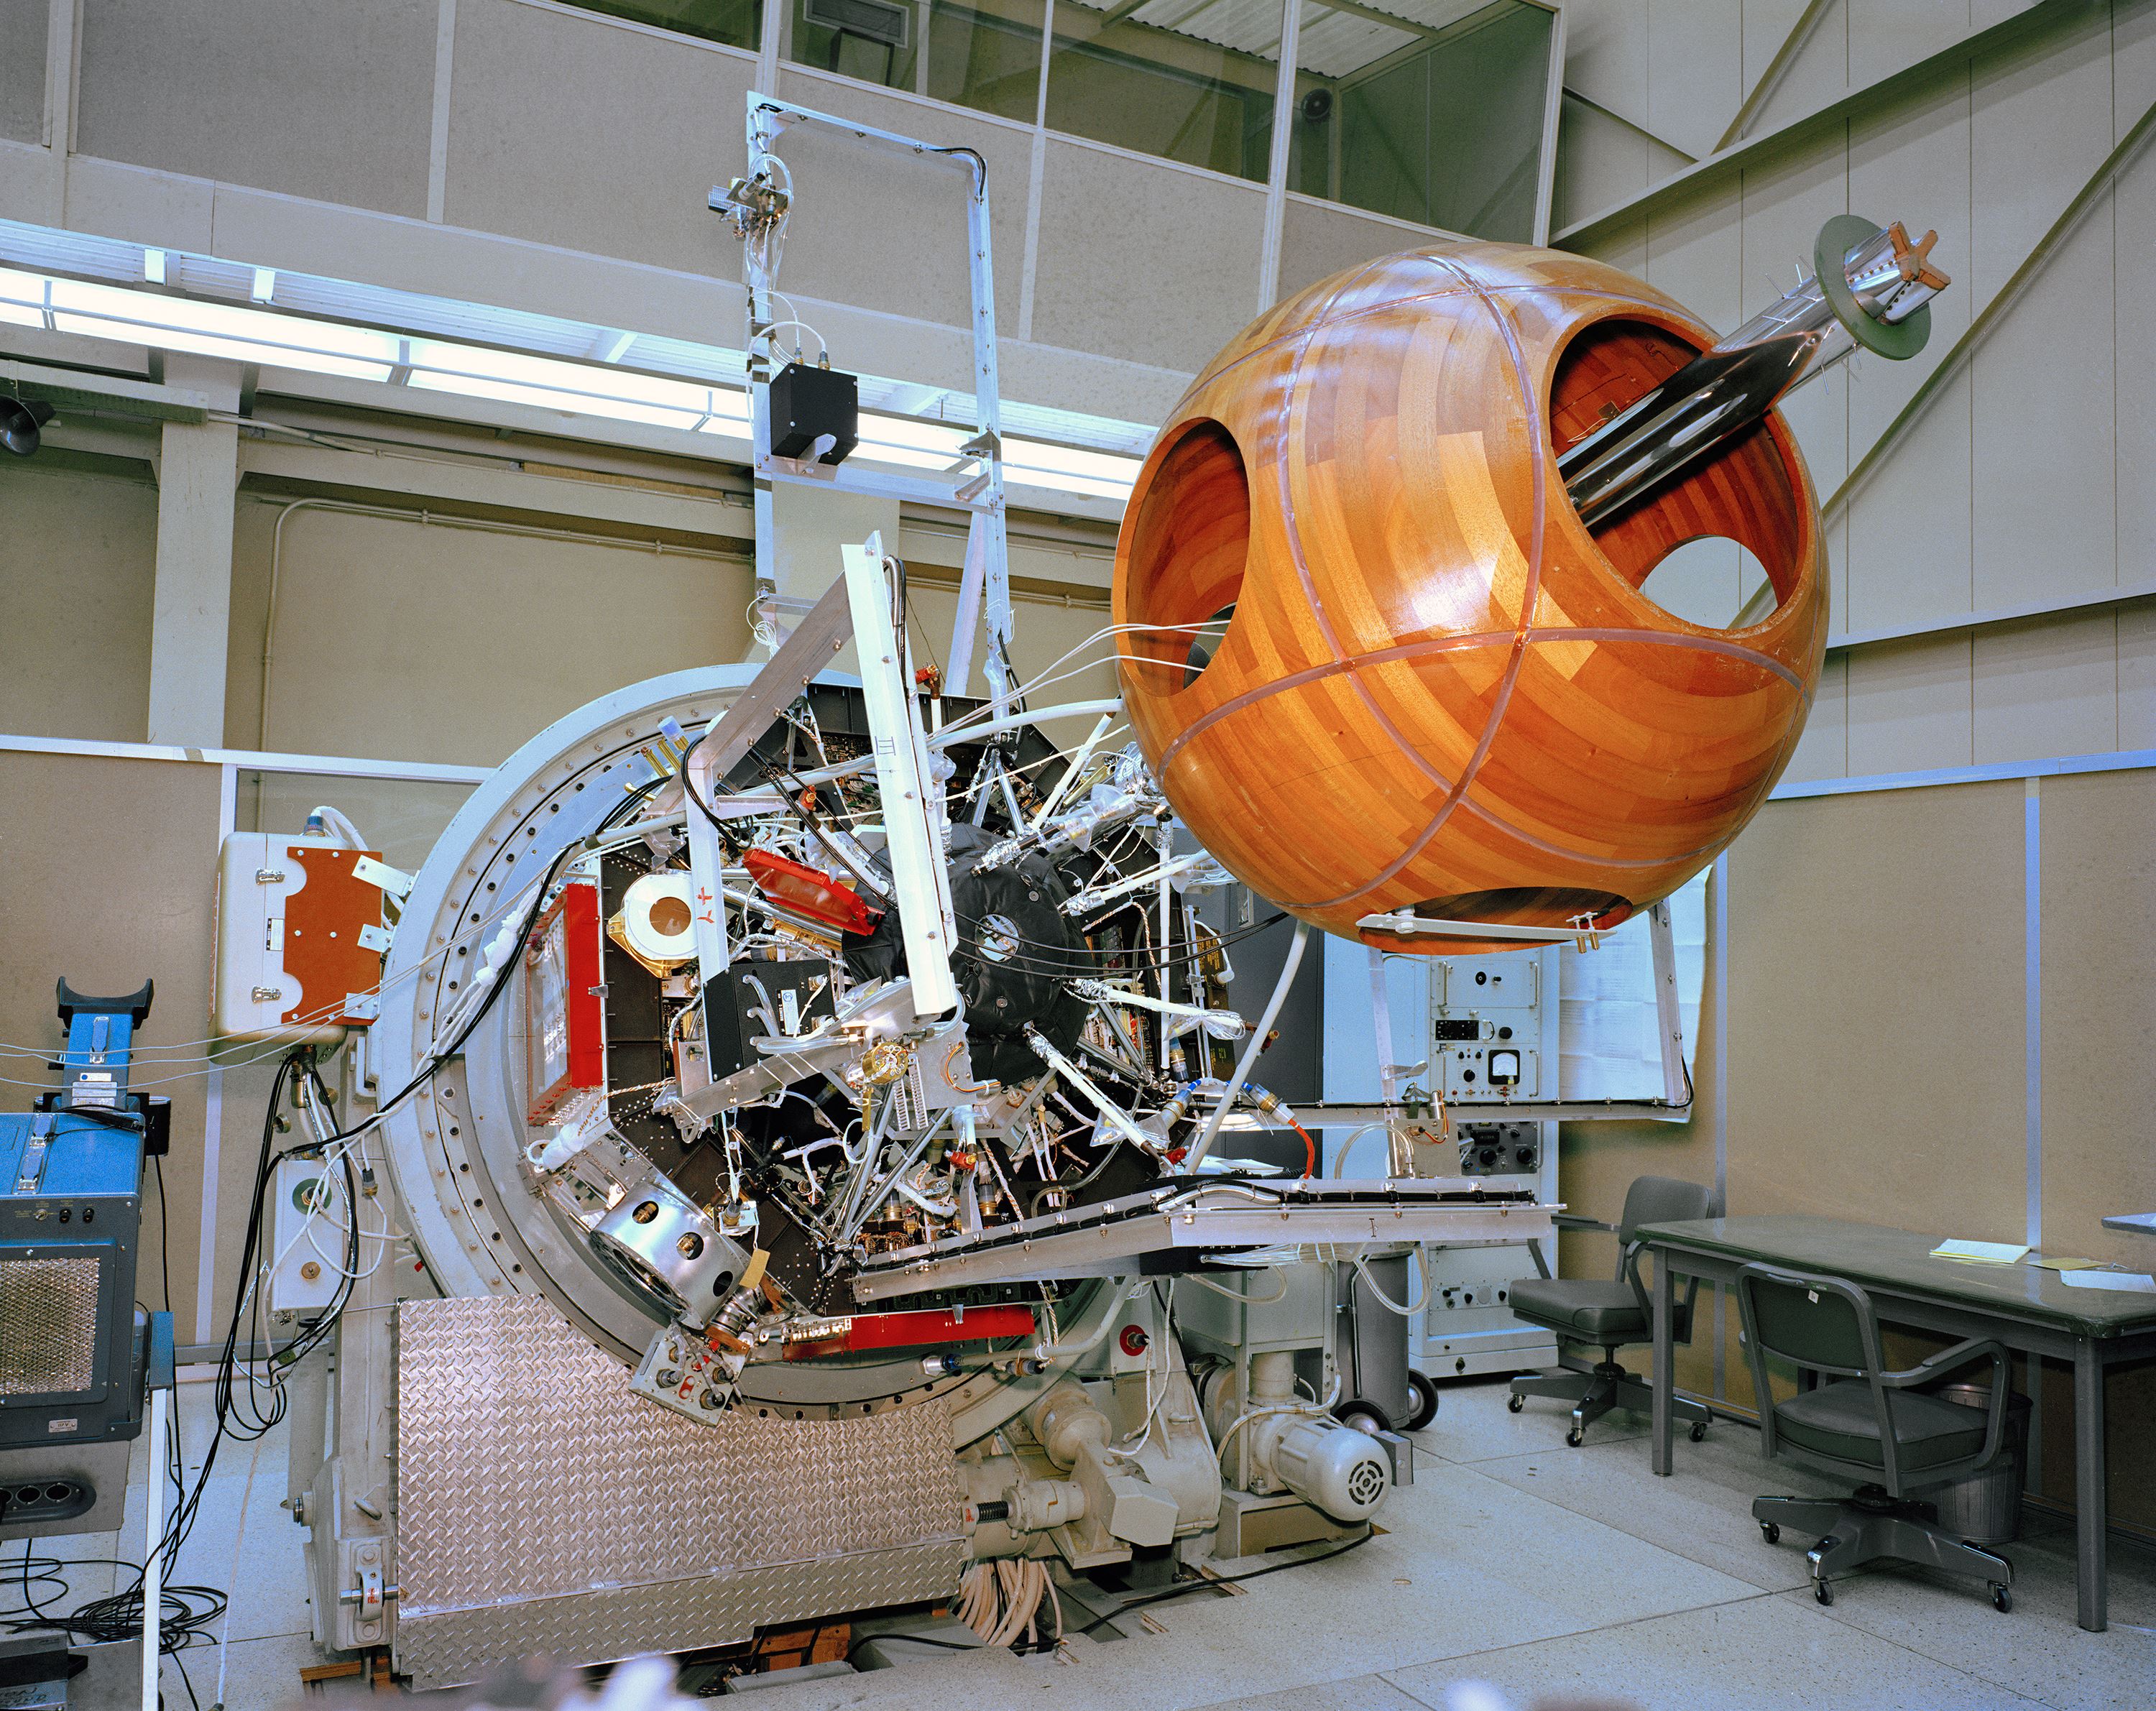 A partially assembled spacecraft in a hangar.